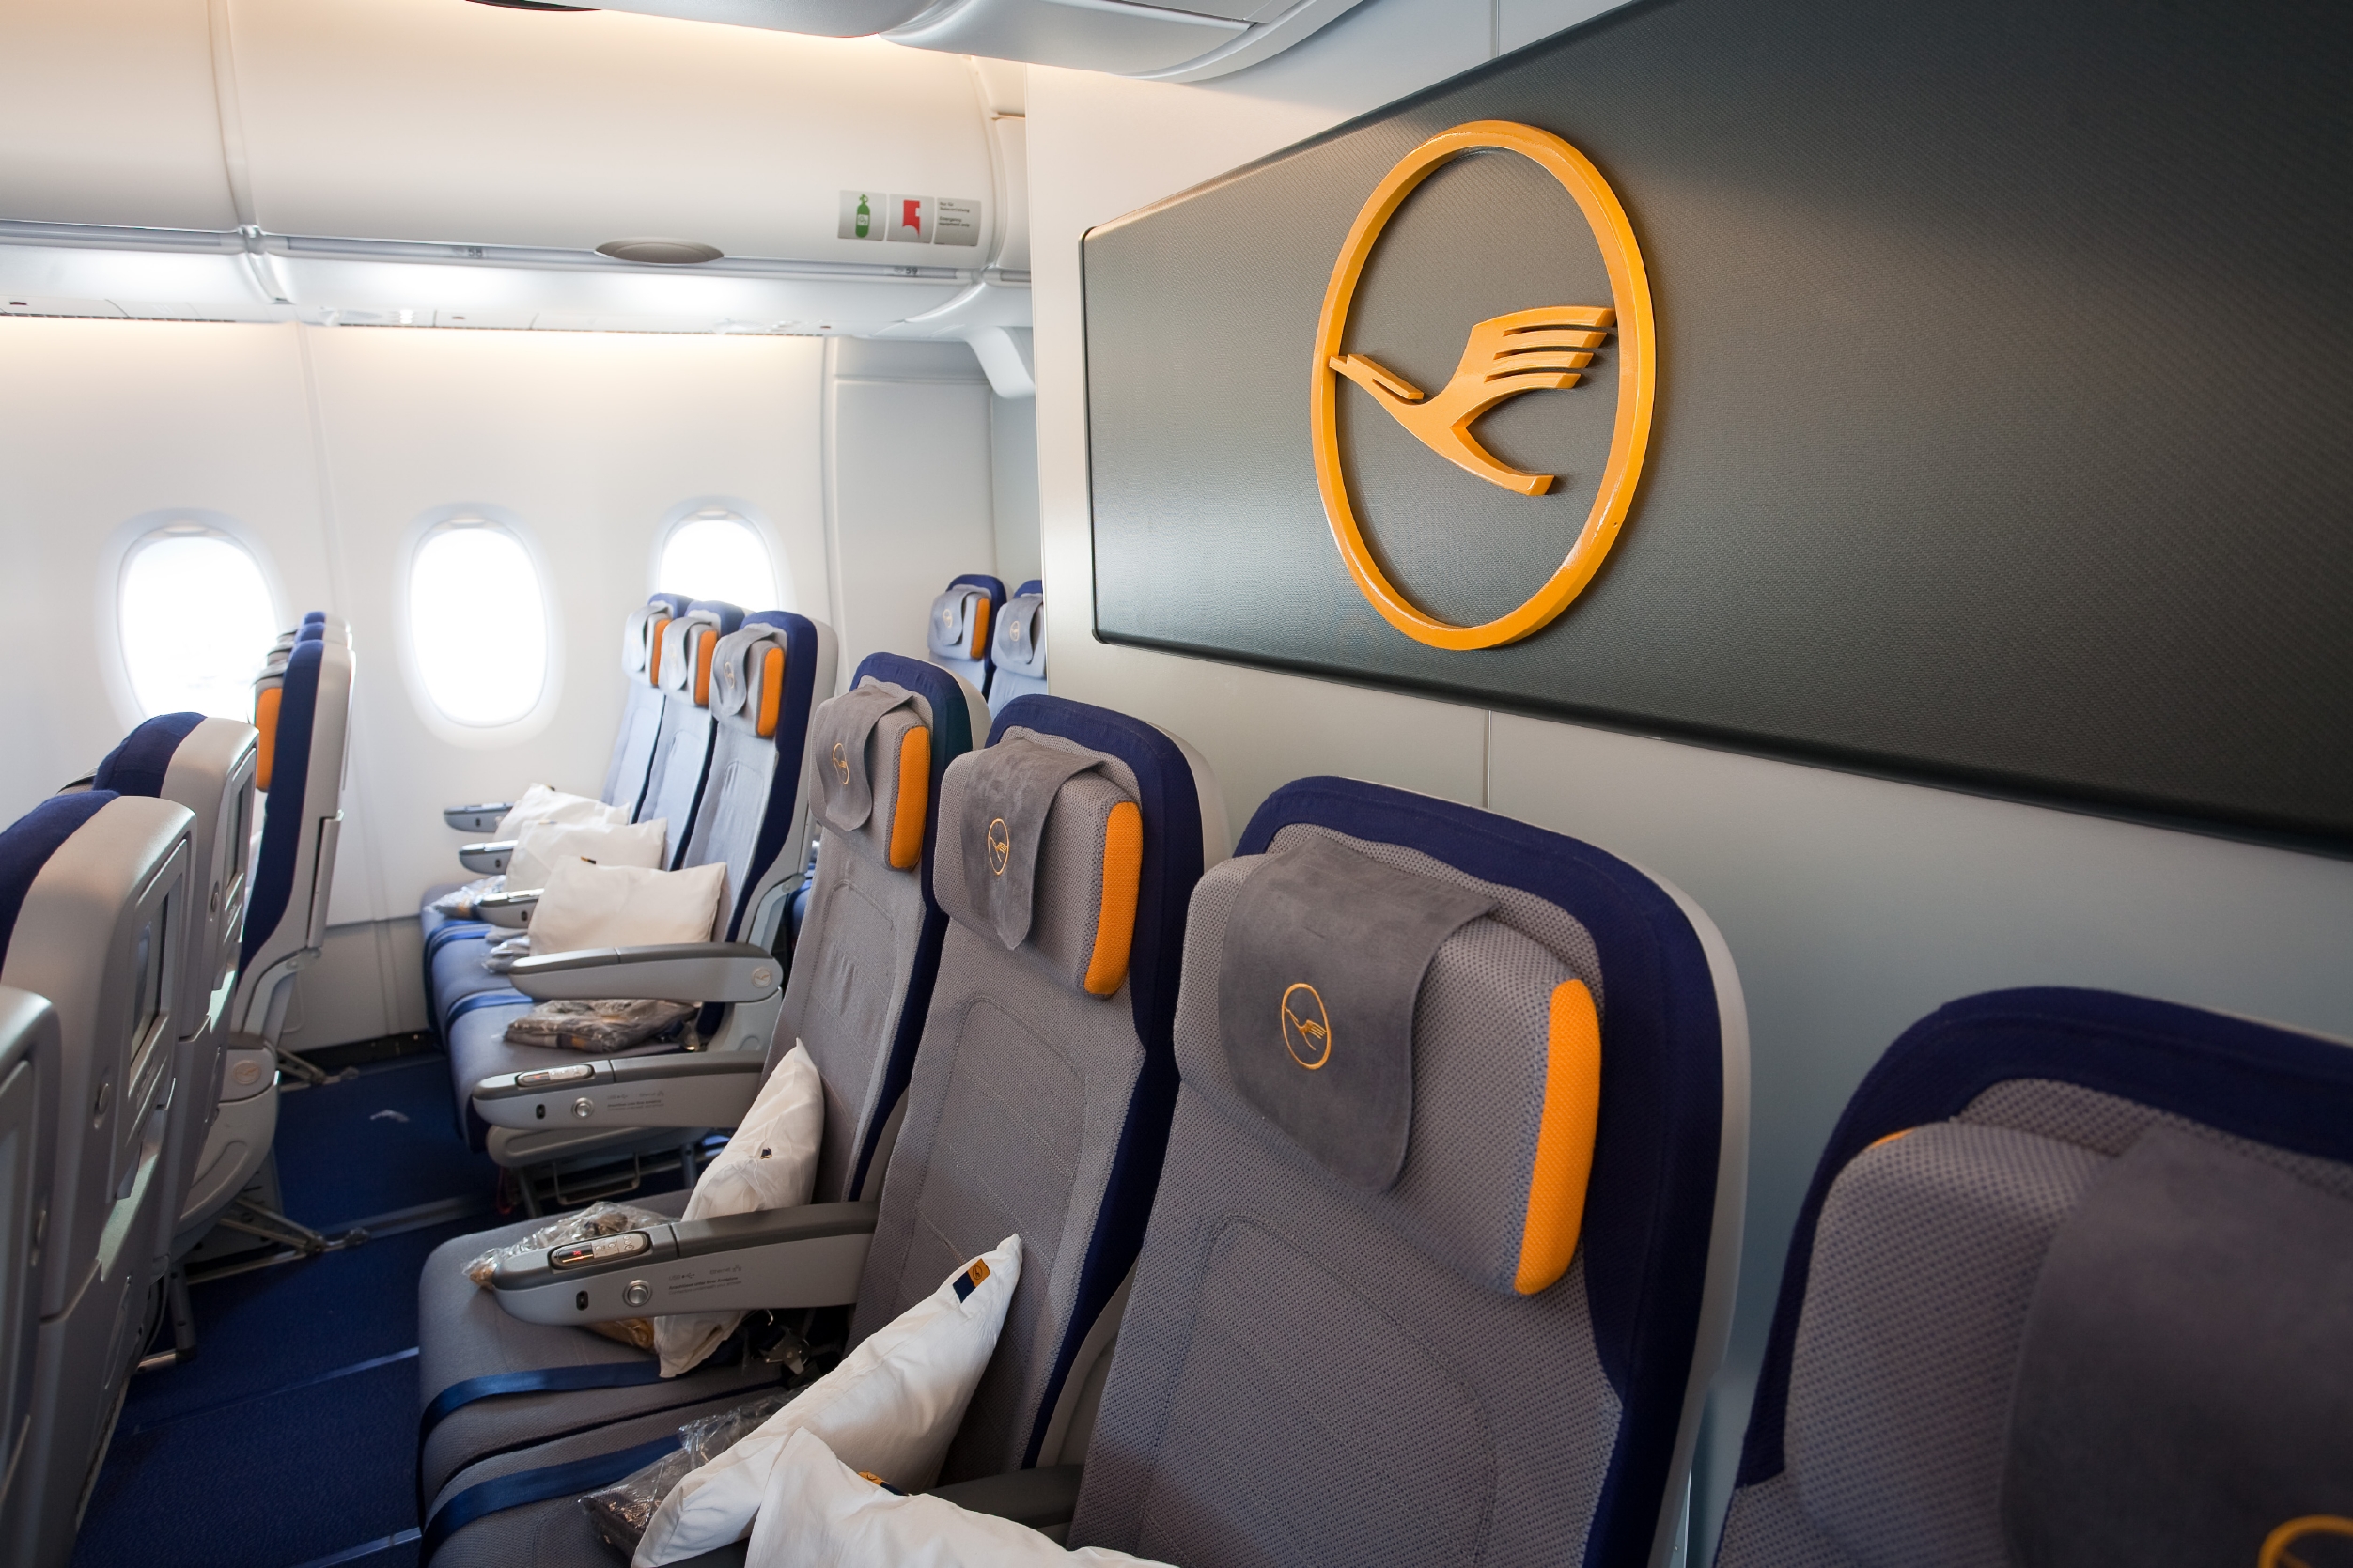 Economy Class seats in A380, Lufthansa Airways